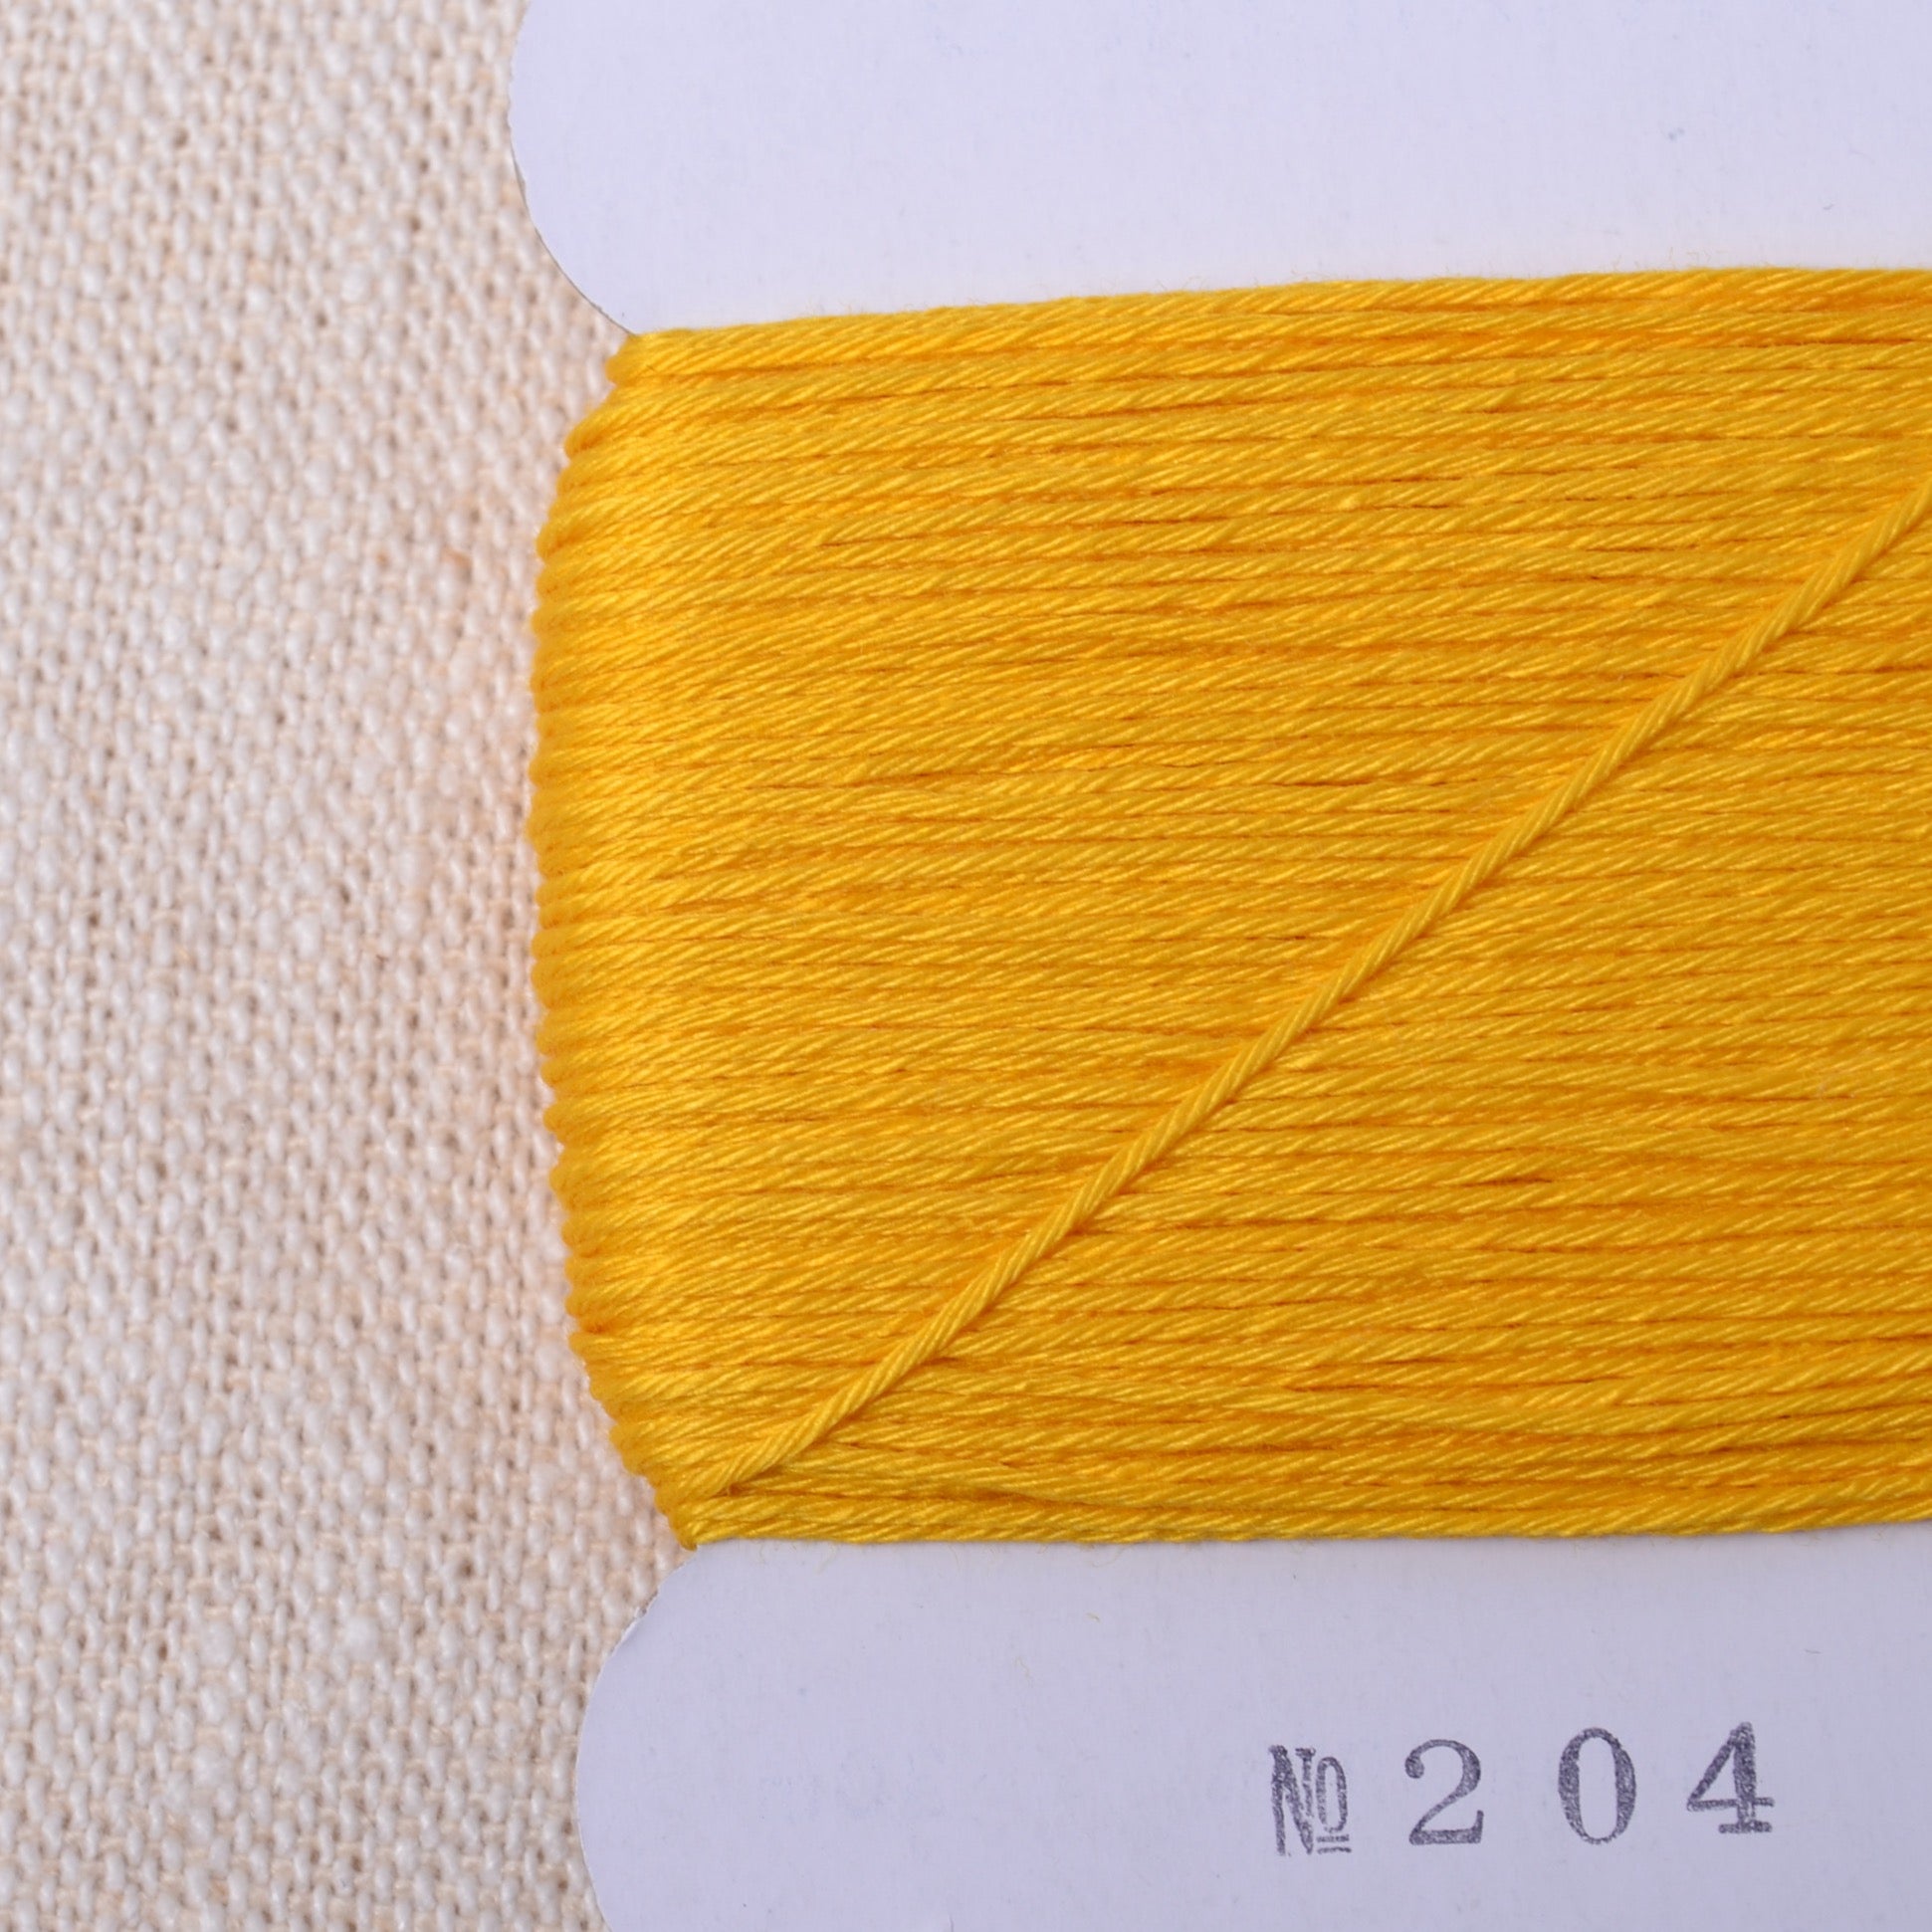 Daruma Sashiko Thread, yellow #204